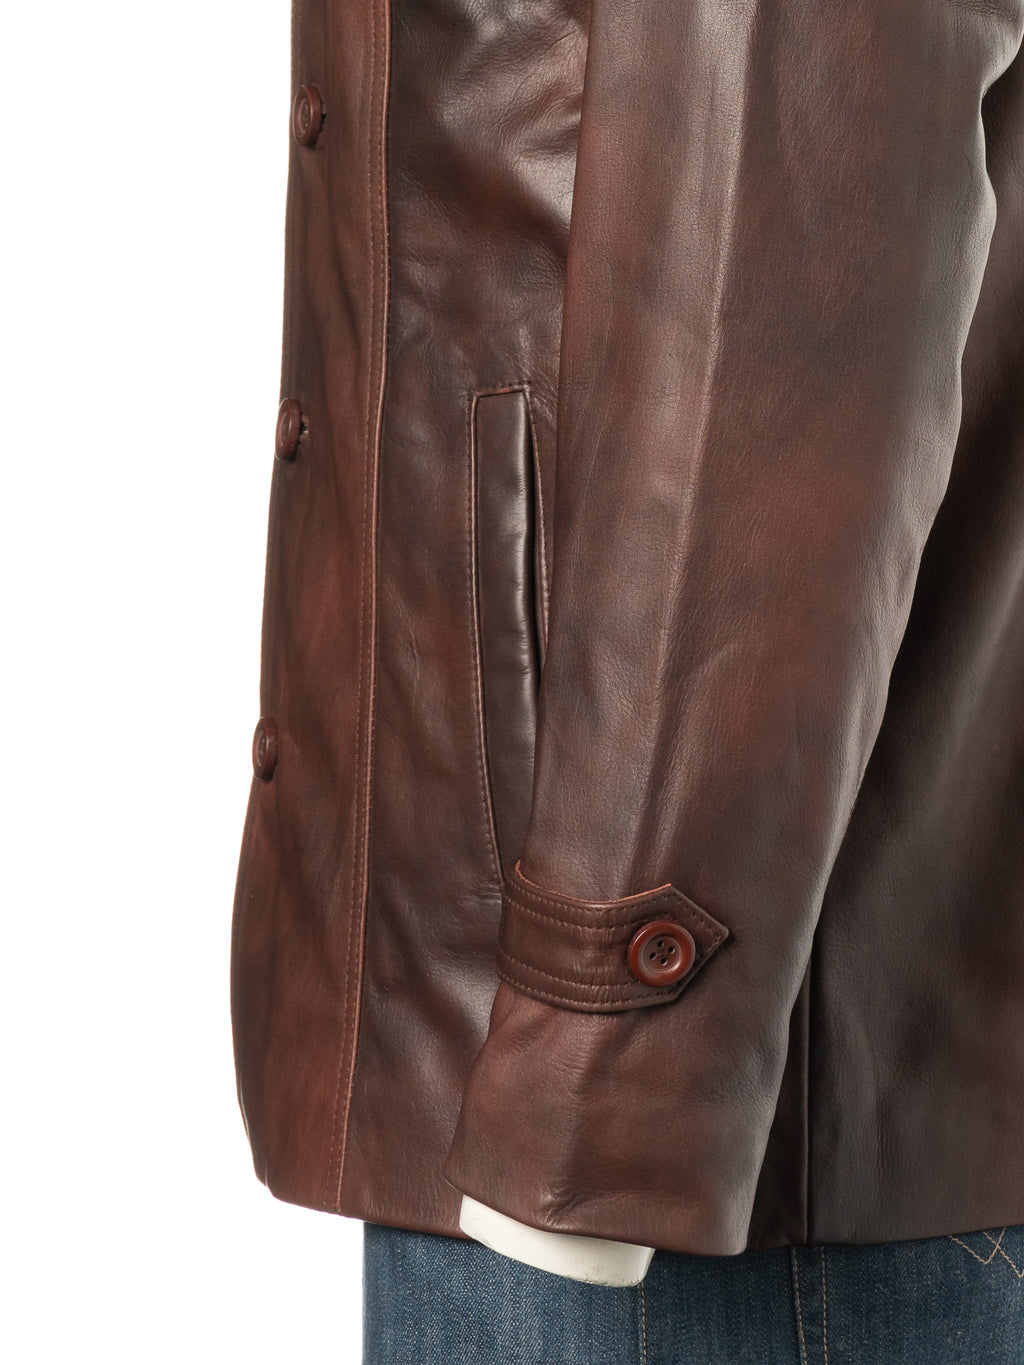 Men's Reddish Brown Cow Hide Reefer Style Jacket: Carlito